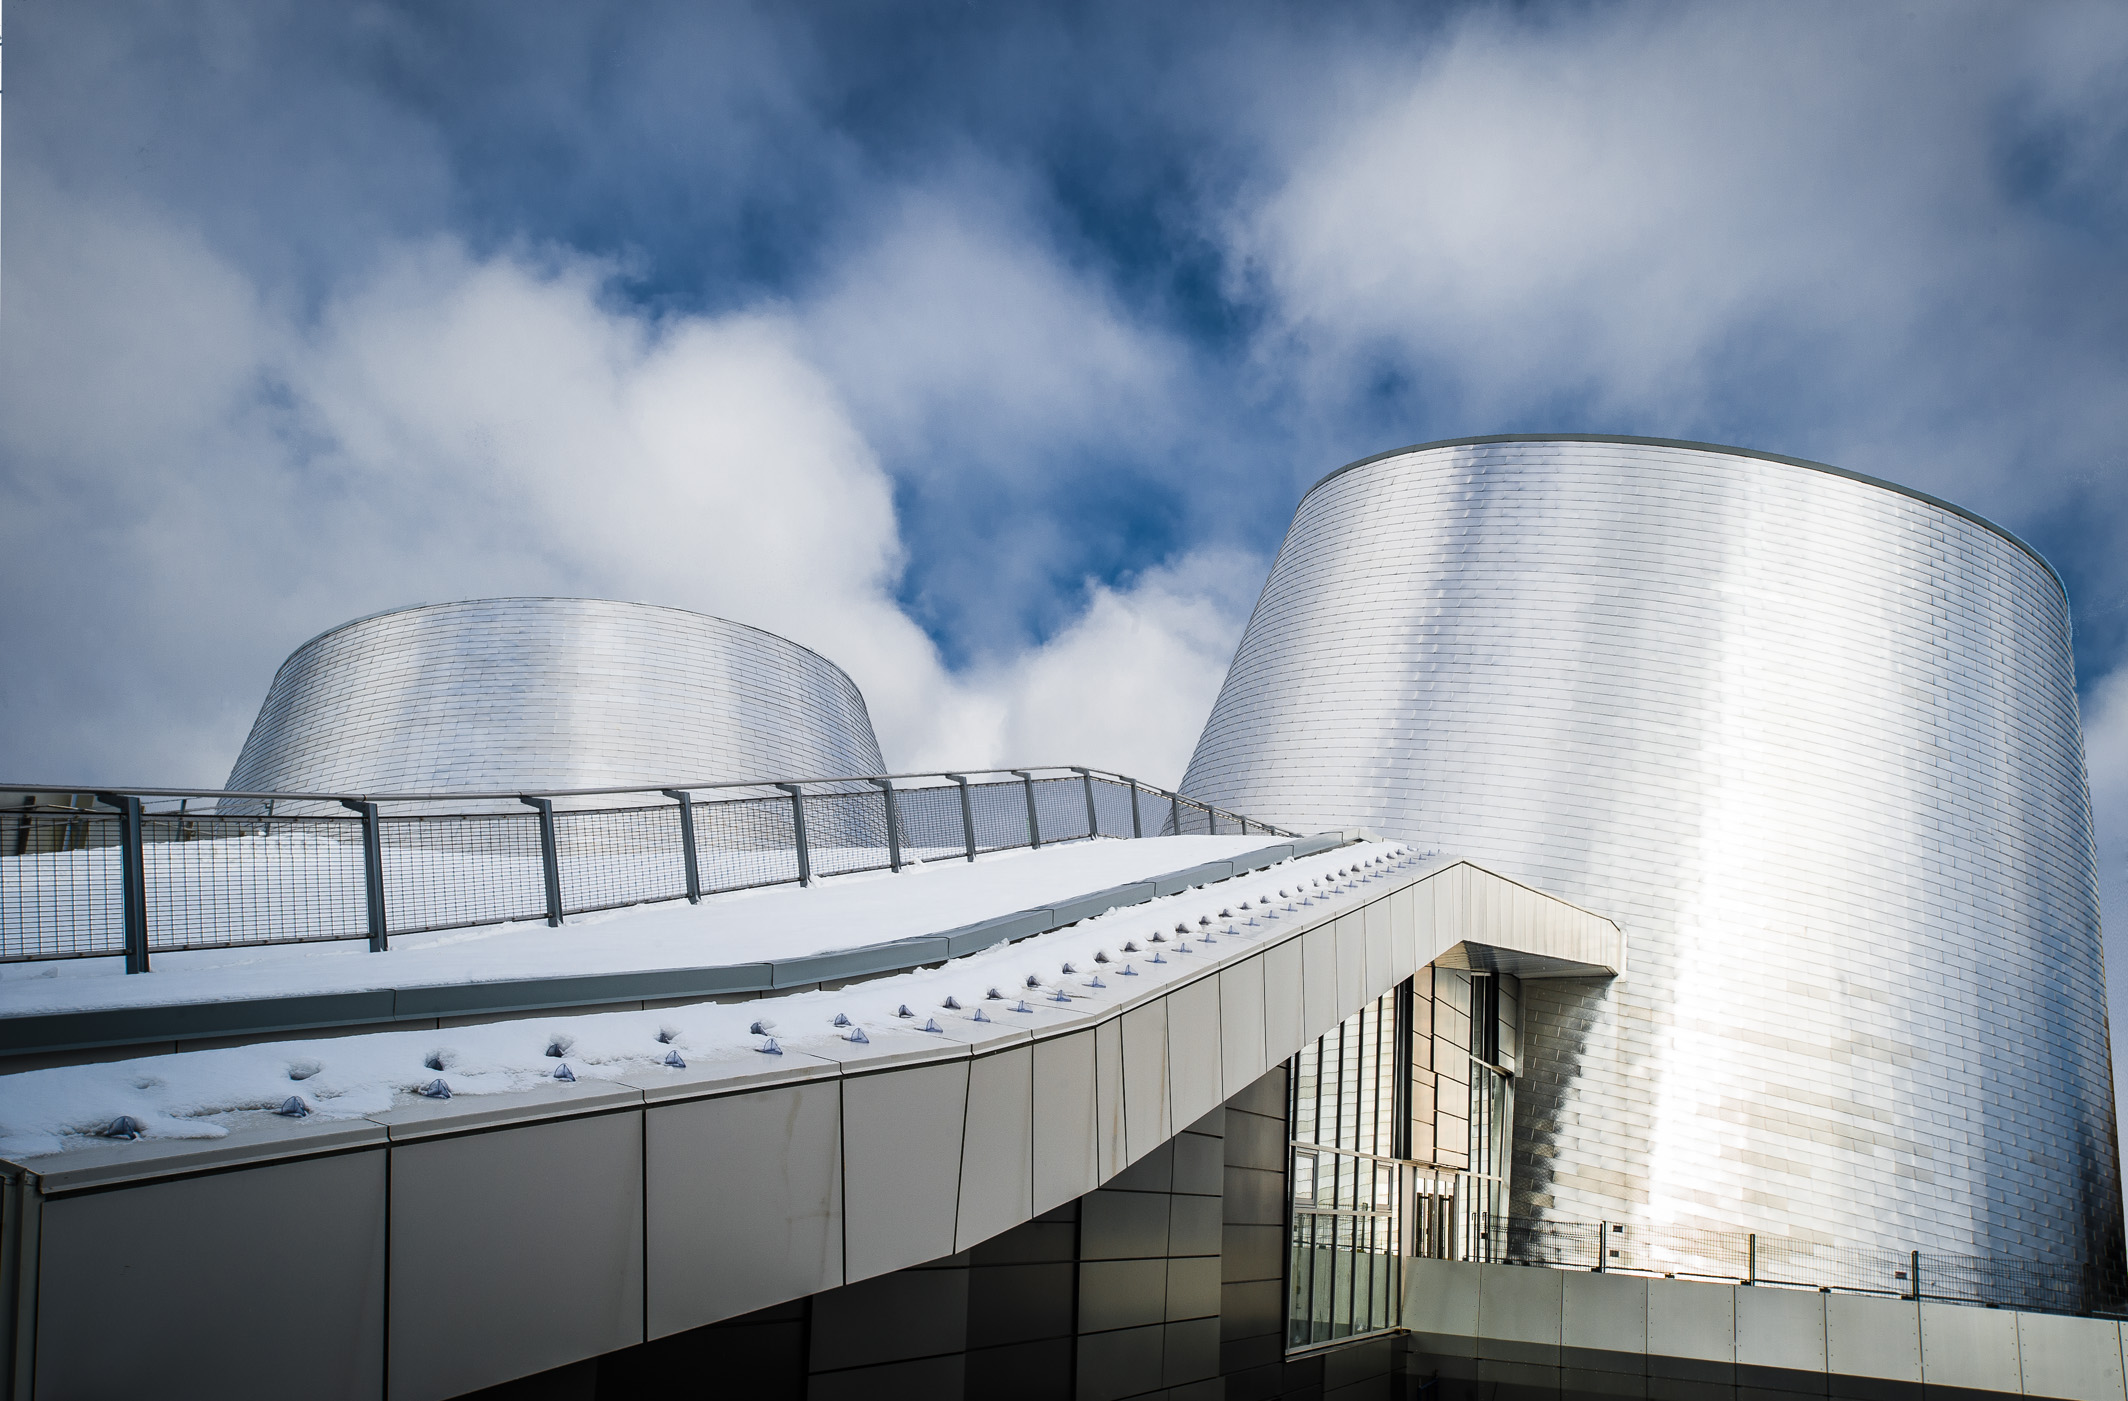 The Montreal Rio Tinto Alcan Planetarium. (Credit: Space for Life)